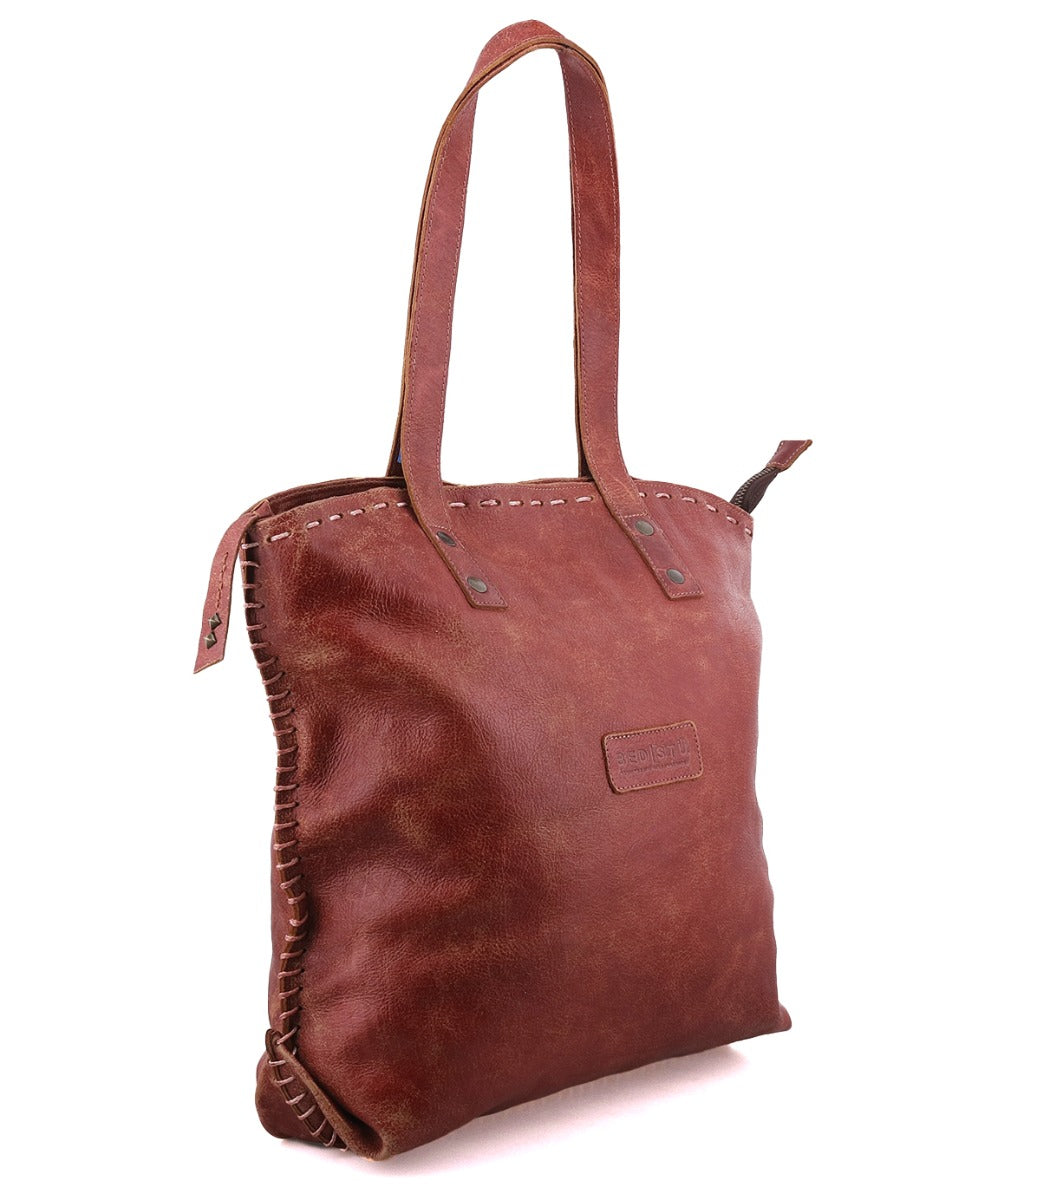 The Skye II by Bed Stu women's leather tote bag.